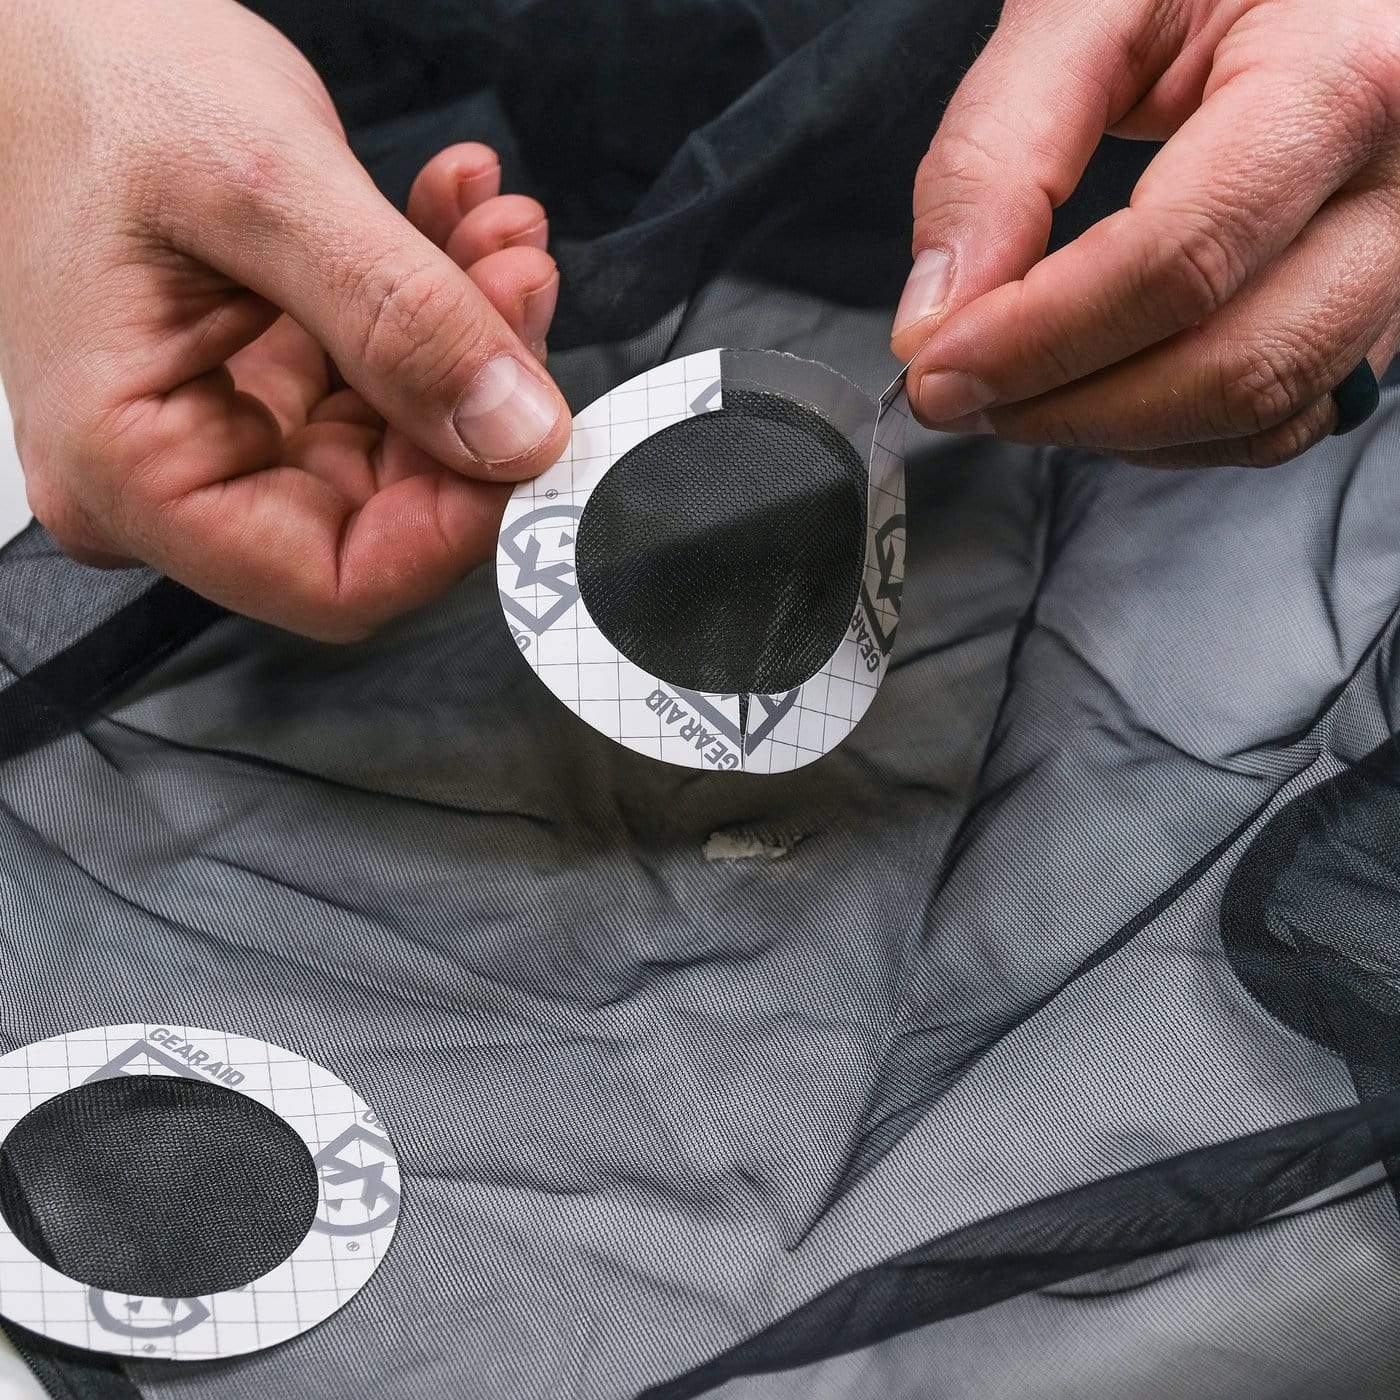 Hands applying a circular Tenacious Tape Mesh Patch from Hummingbird Hammocks to mend a tear in black mesh fabric.